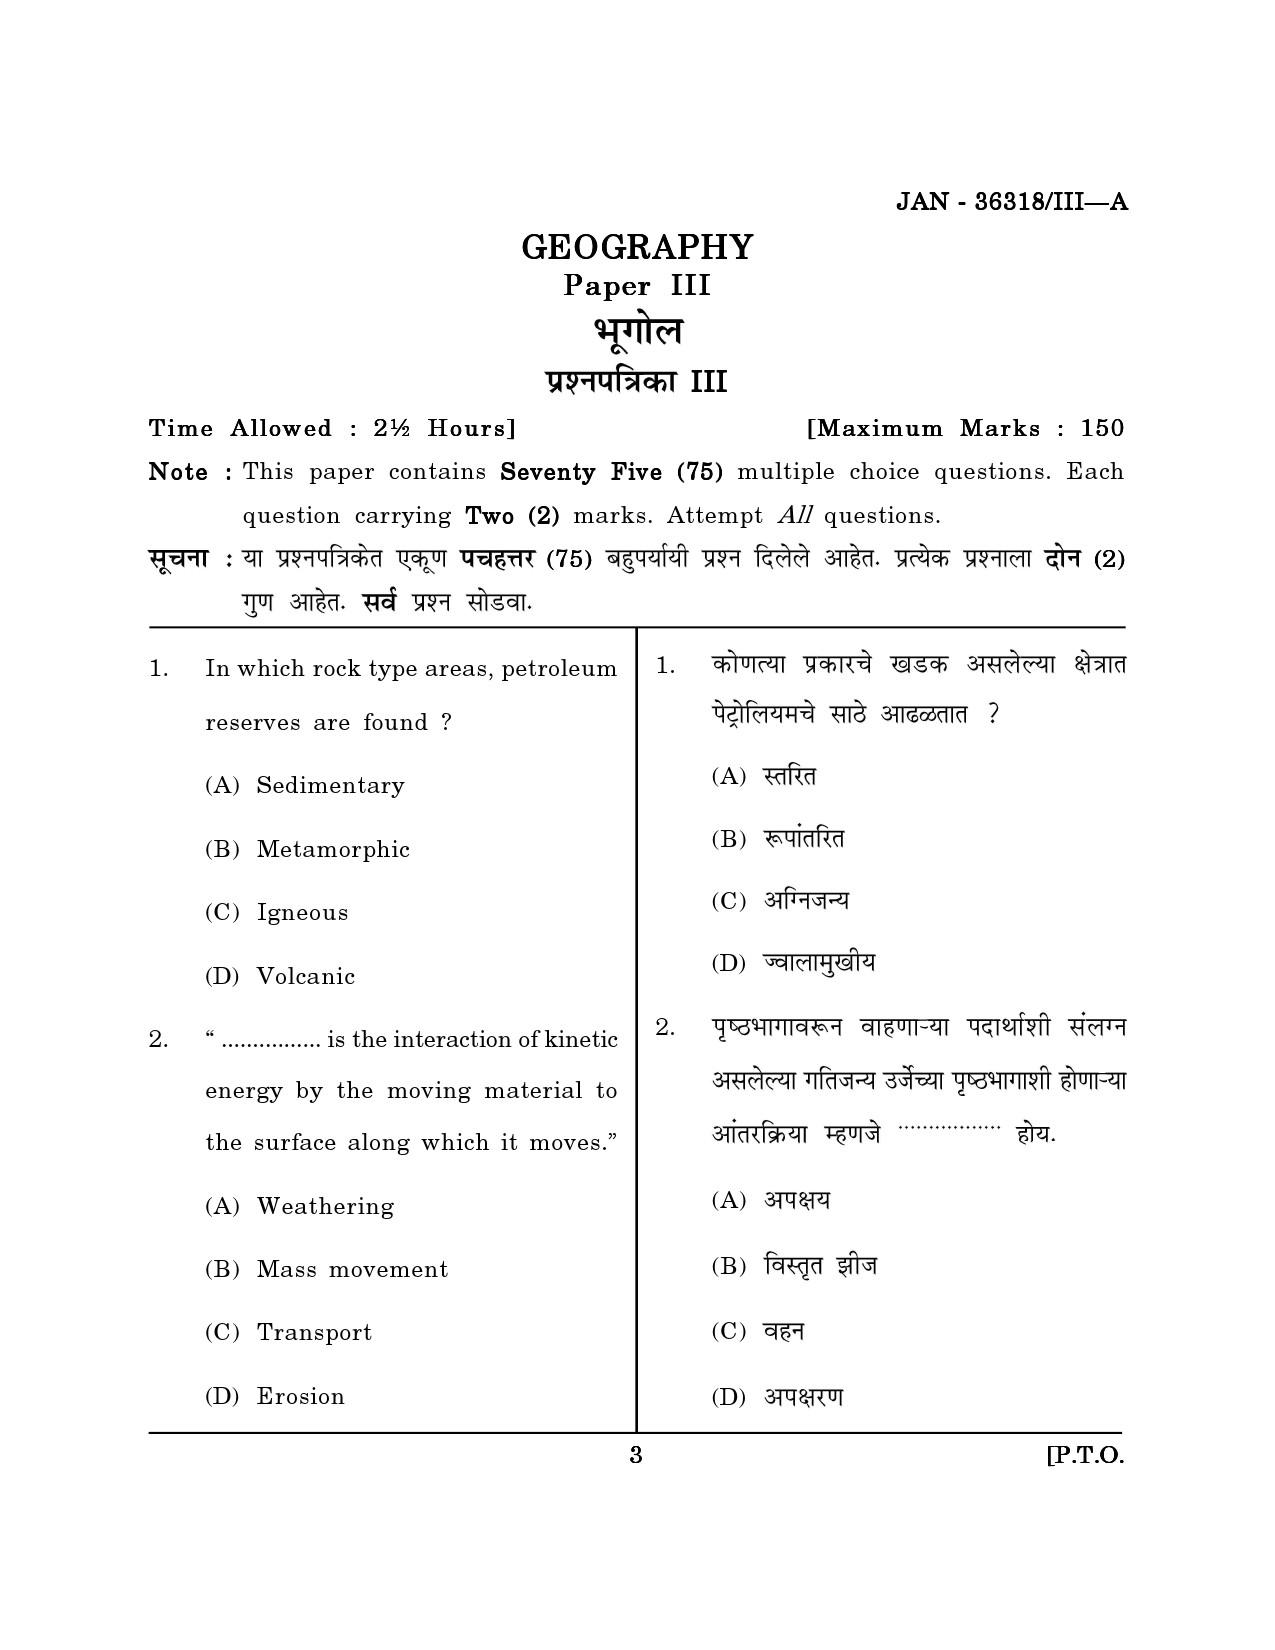 Maharashtra SET Geography Question Paper III January 2018 2